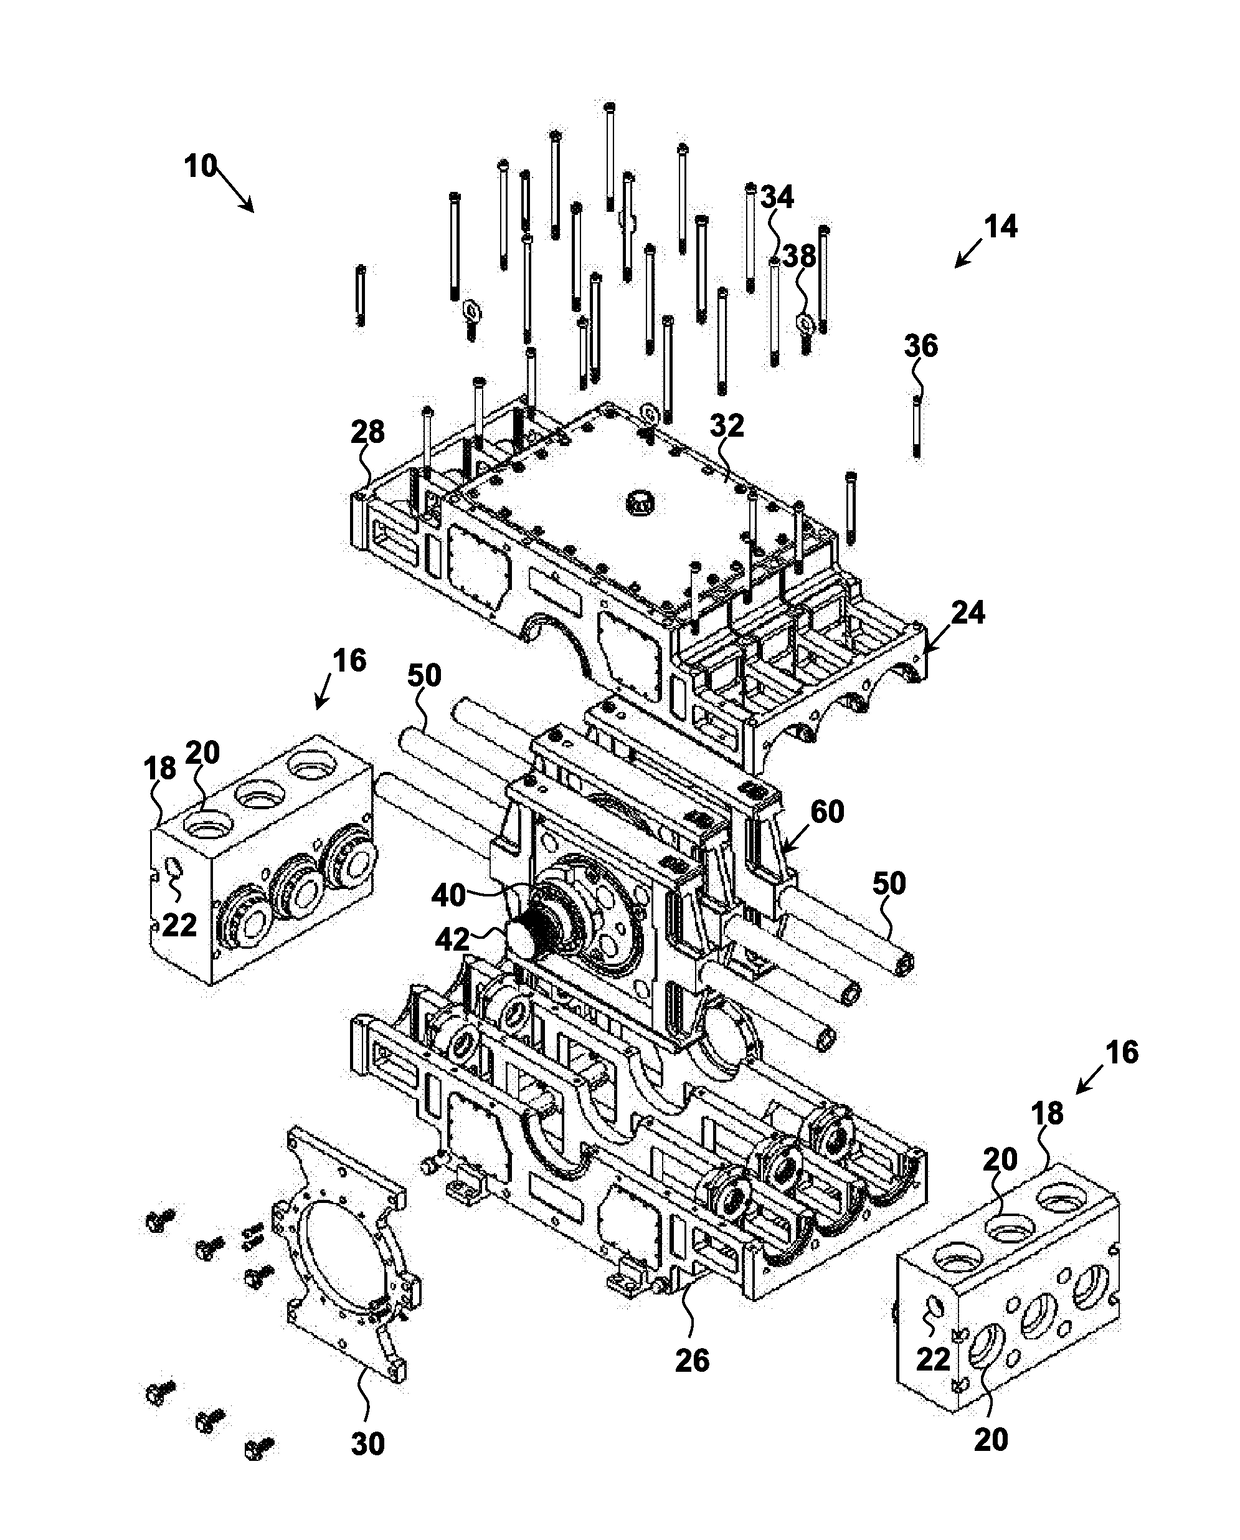 Drive mechanism module for a reciprocating pump